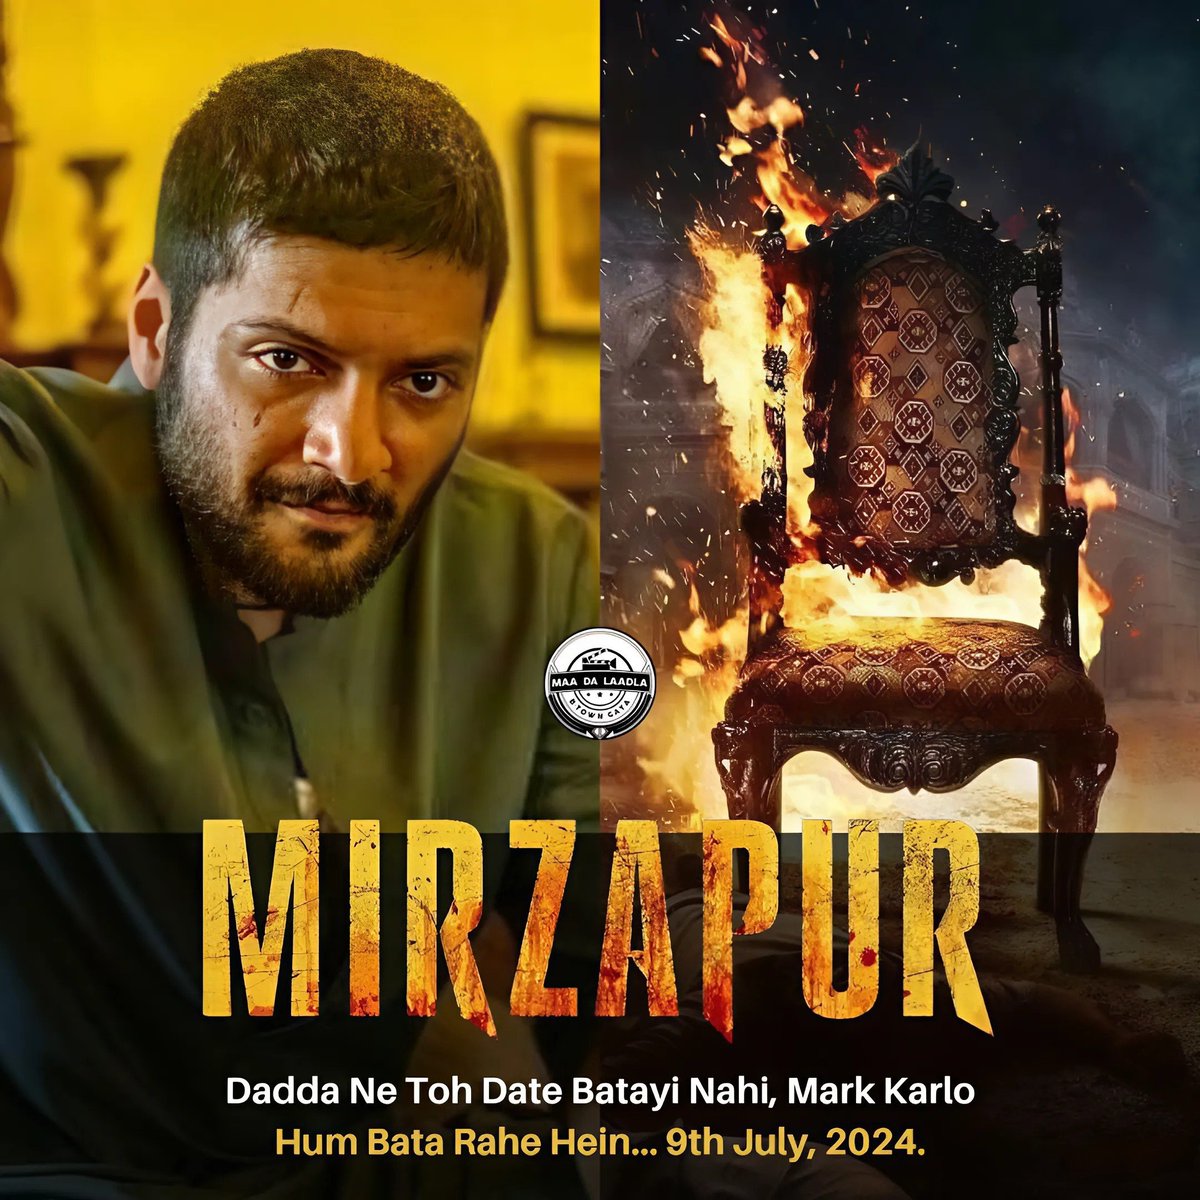 Dekhne ka prabandh kar diye hein... Mark karlo aur nagar mein dhindhora pitwado! 🔥🔥🔥 #Mirzapur3 #MS3W 

#AliFazal #PankajTripathi #ExcelEntertainment